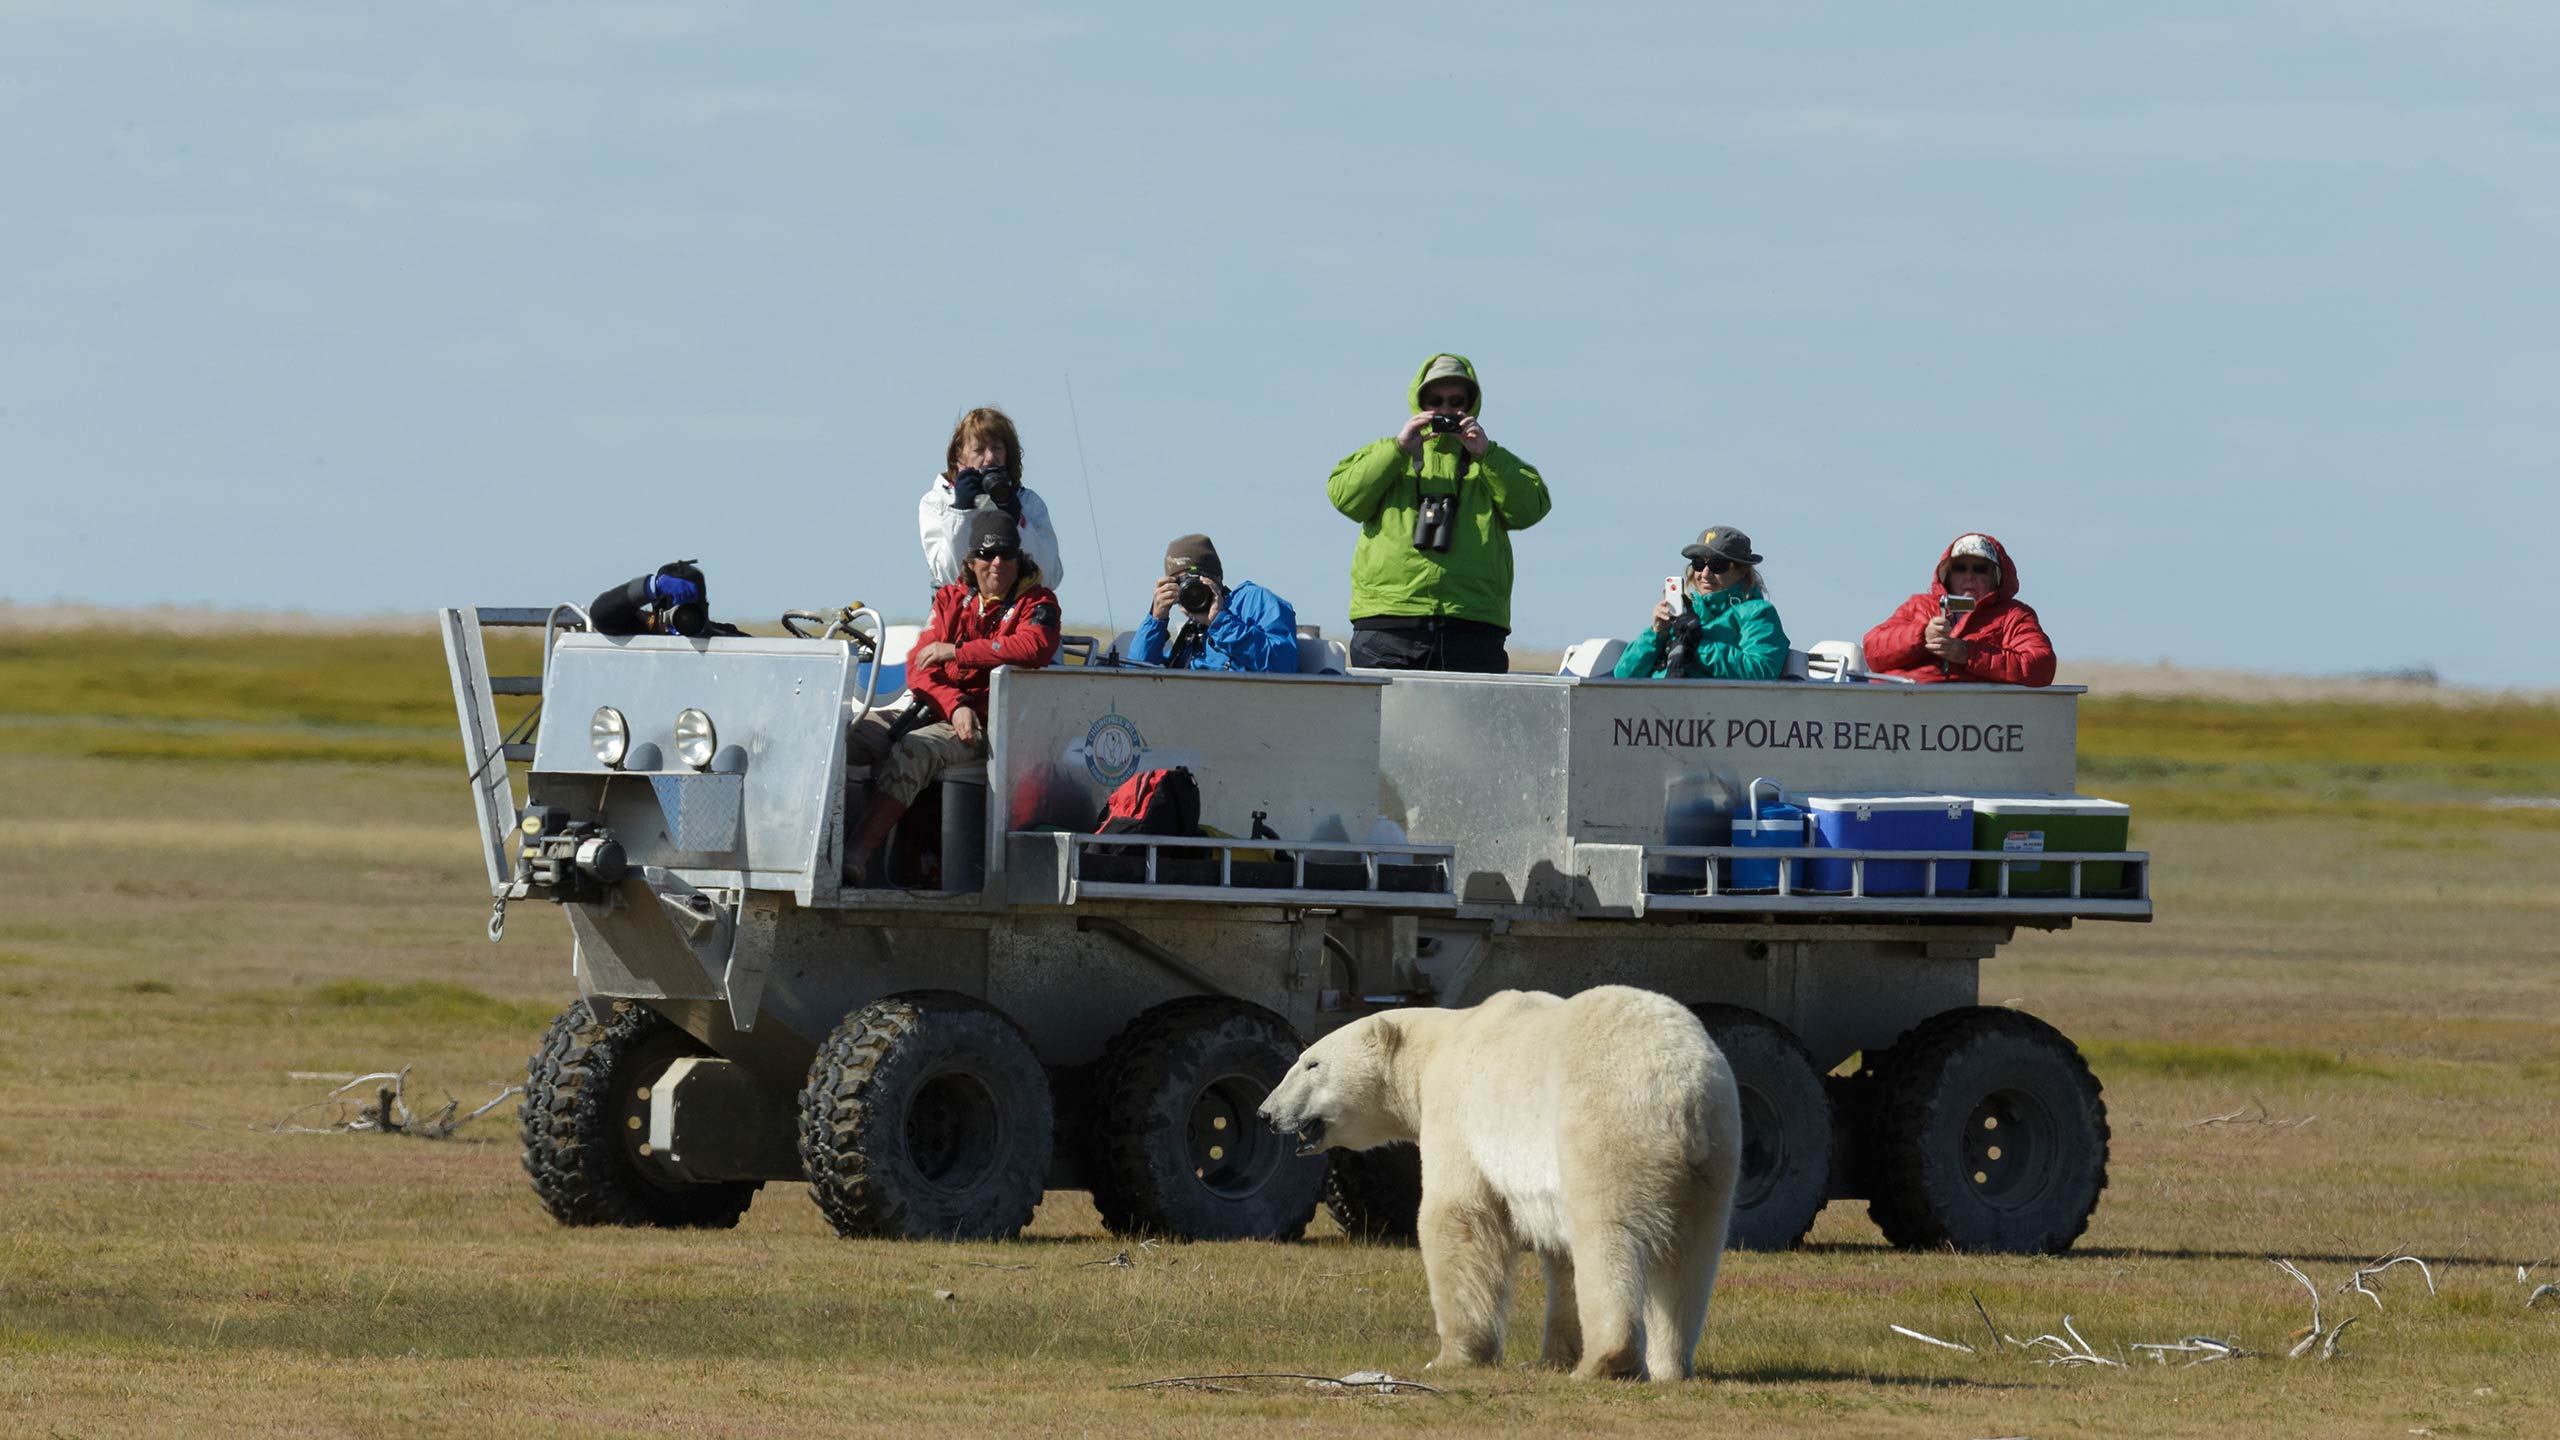 nanuk-polar-bear-lodge-canada-atv